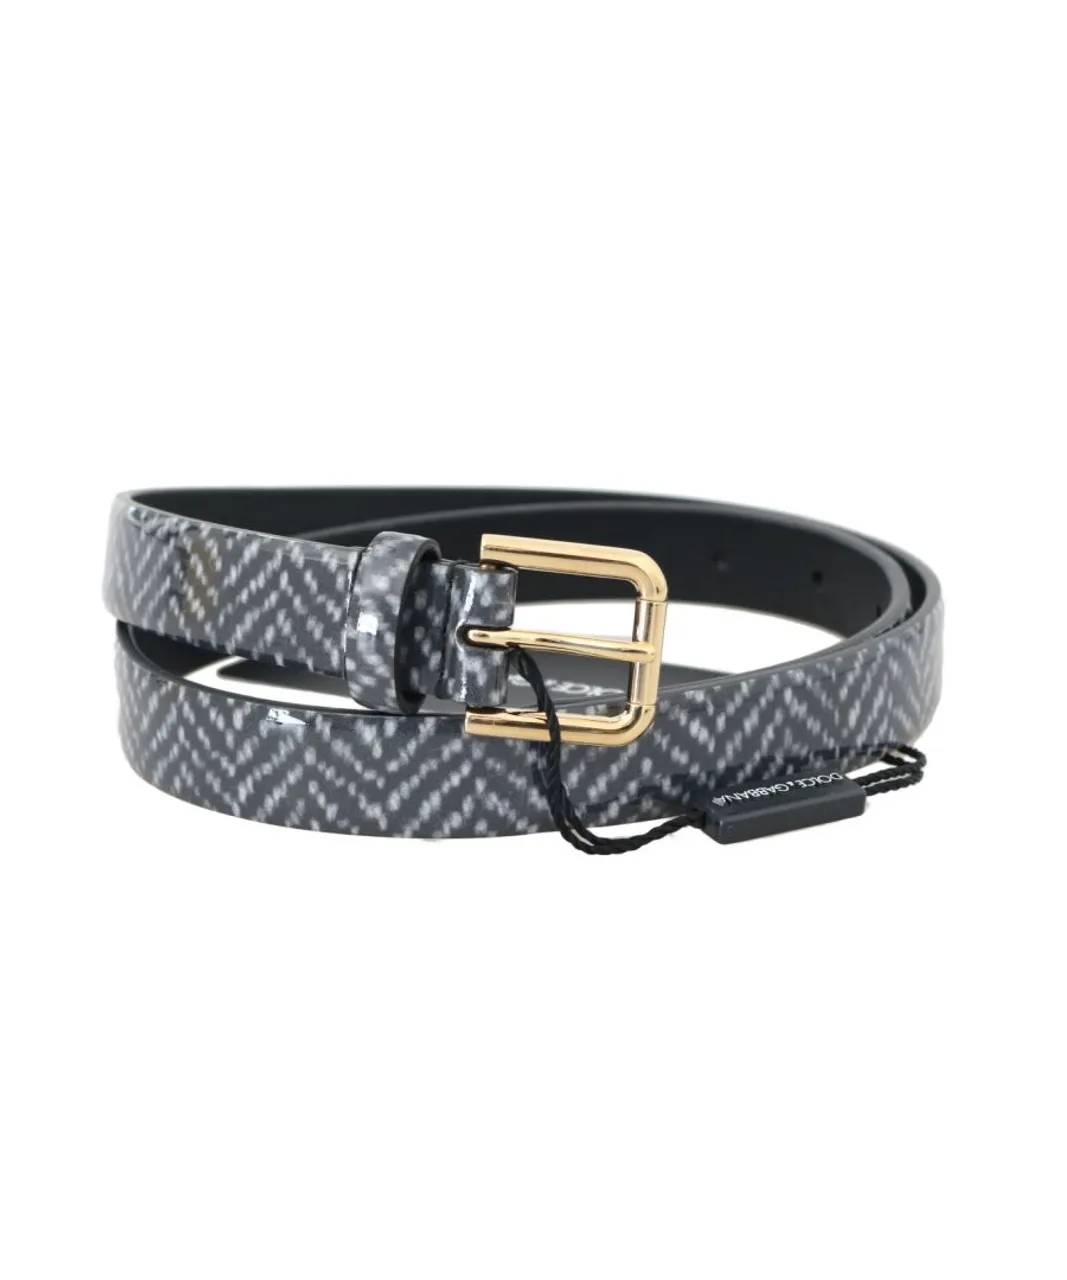 Dolce & Gabbana Womens Black White Chevron Pattern Leather Belt - Multicolour